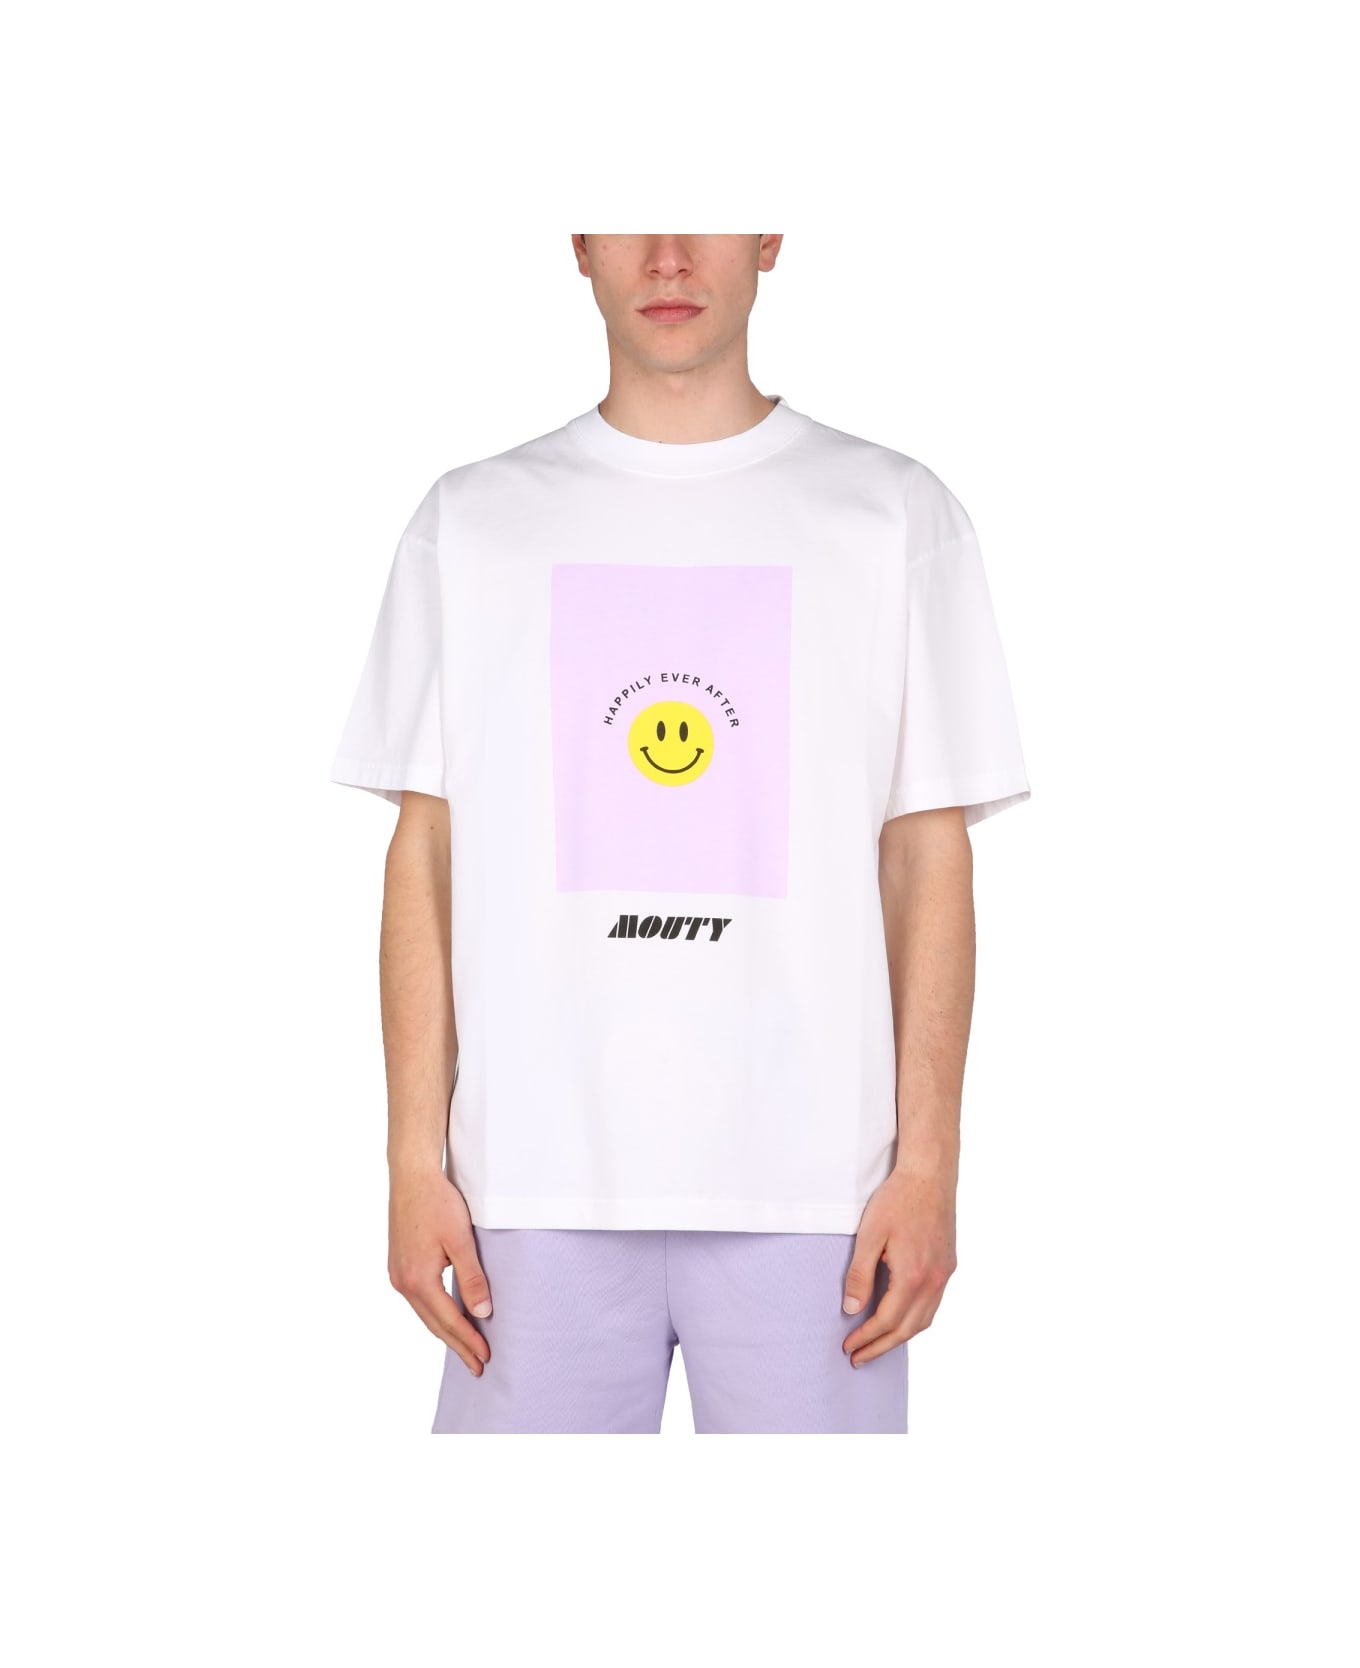 Mouty "smiley" T-shirt - WHITE